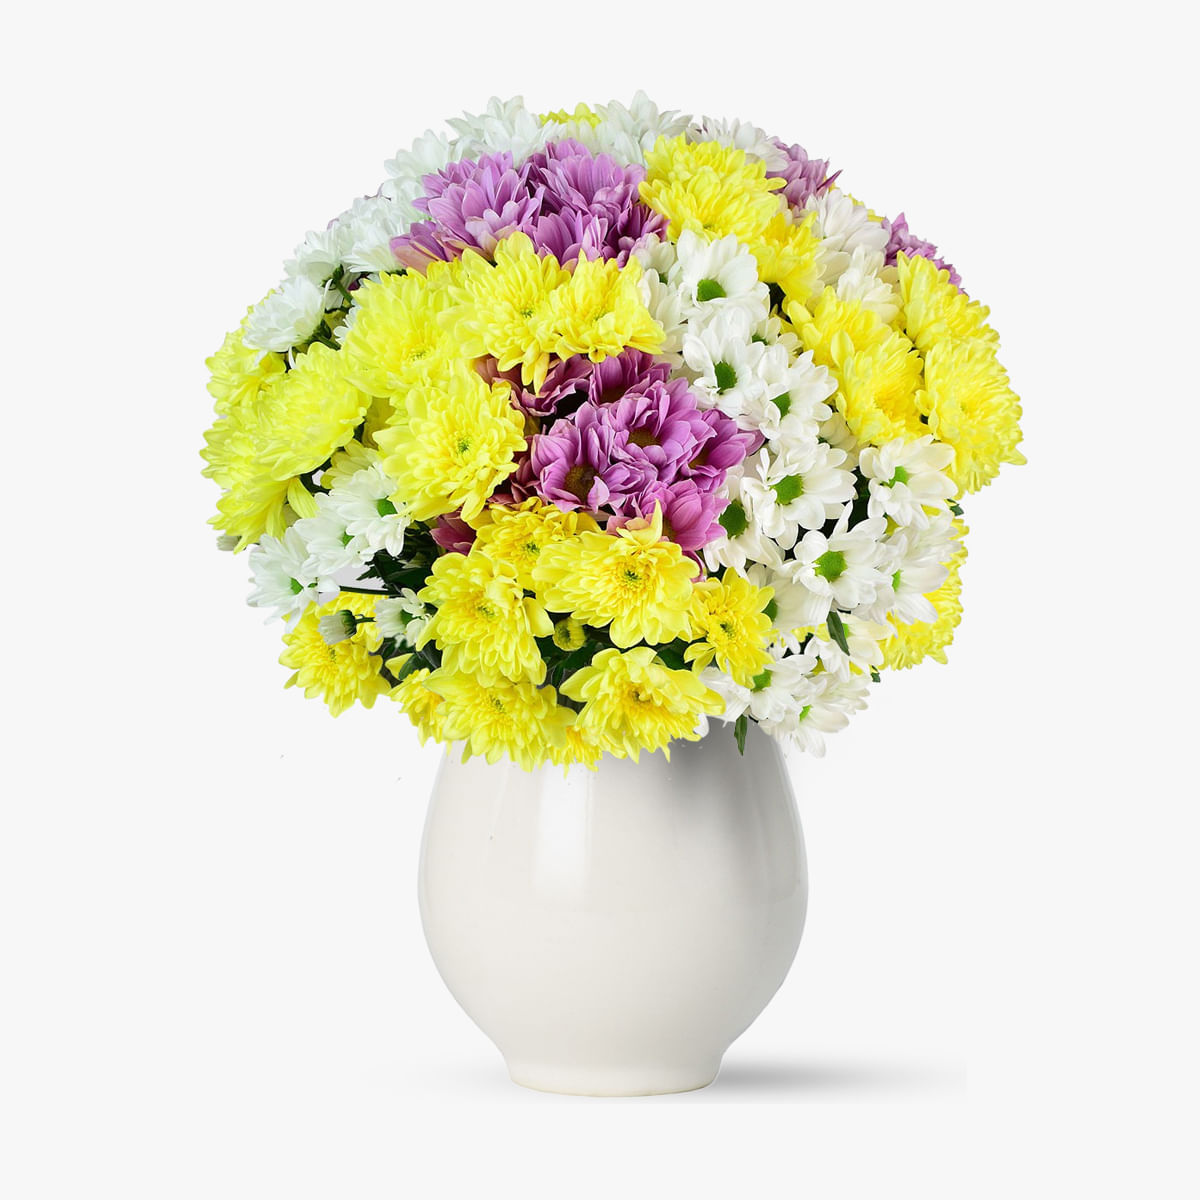 Buchet de 45 crizanteme multicolore pentru a insenina ziua persoanei dragi